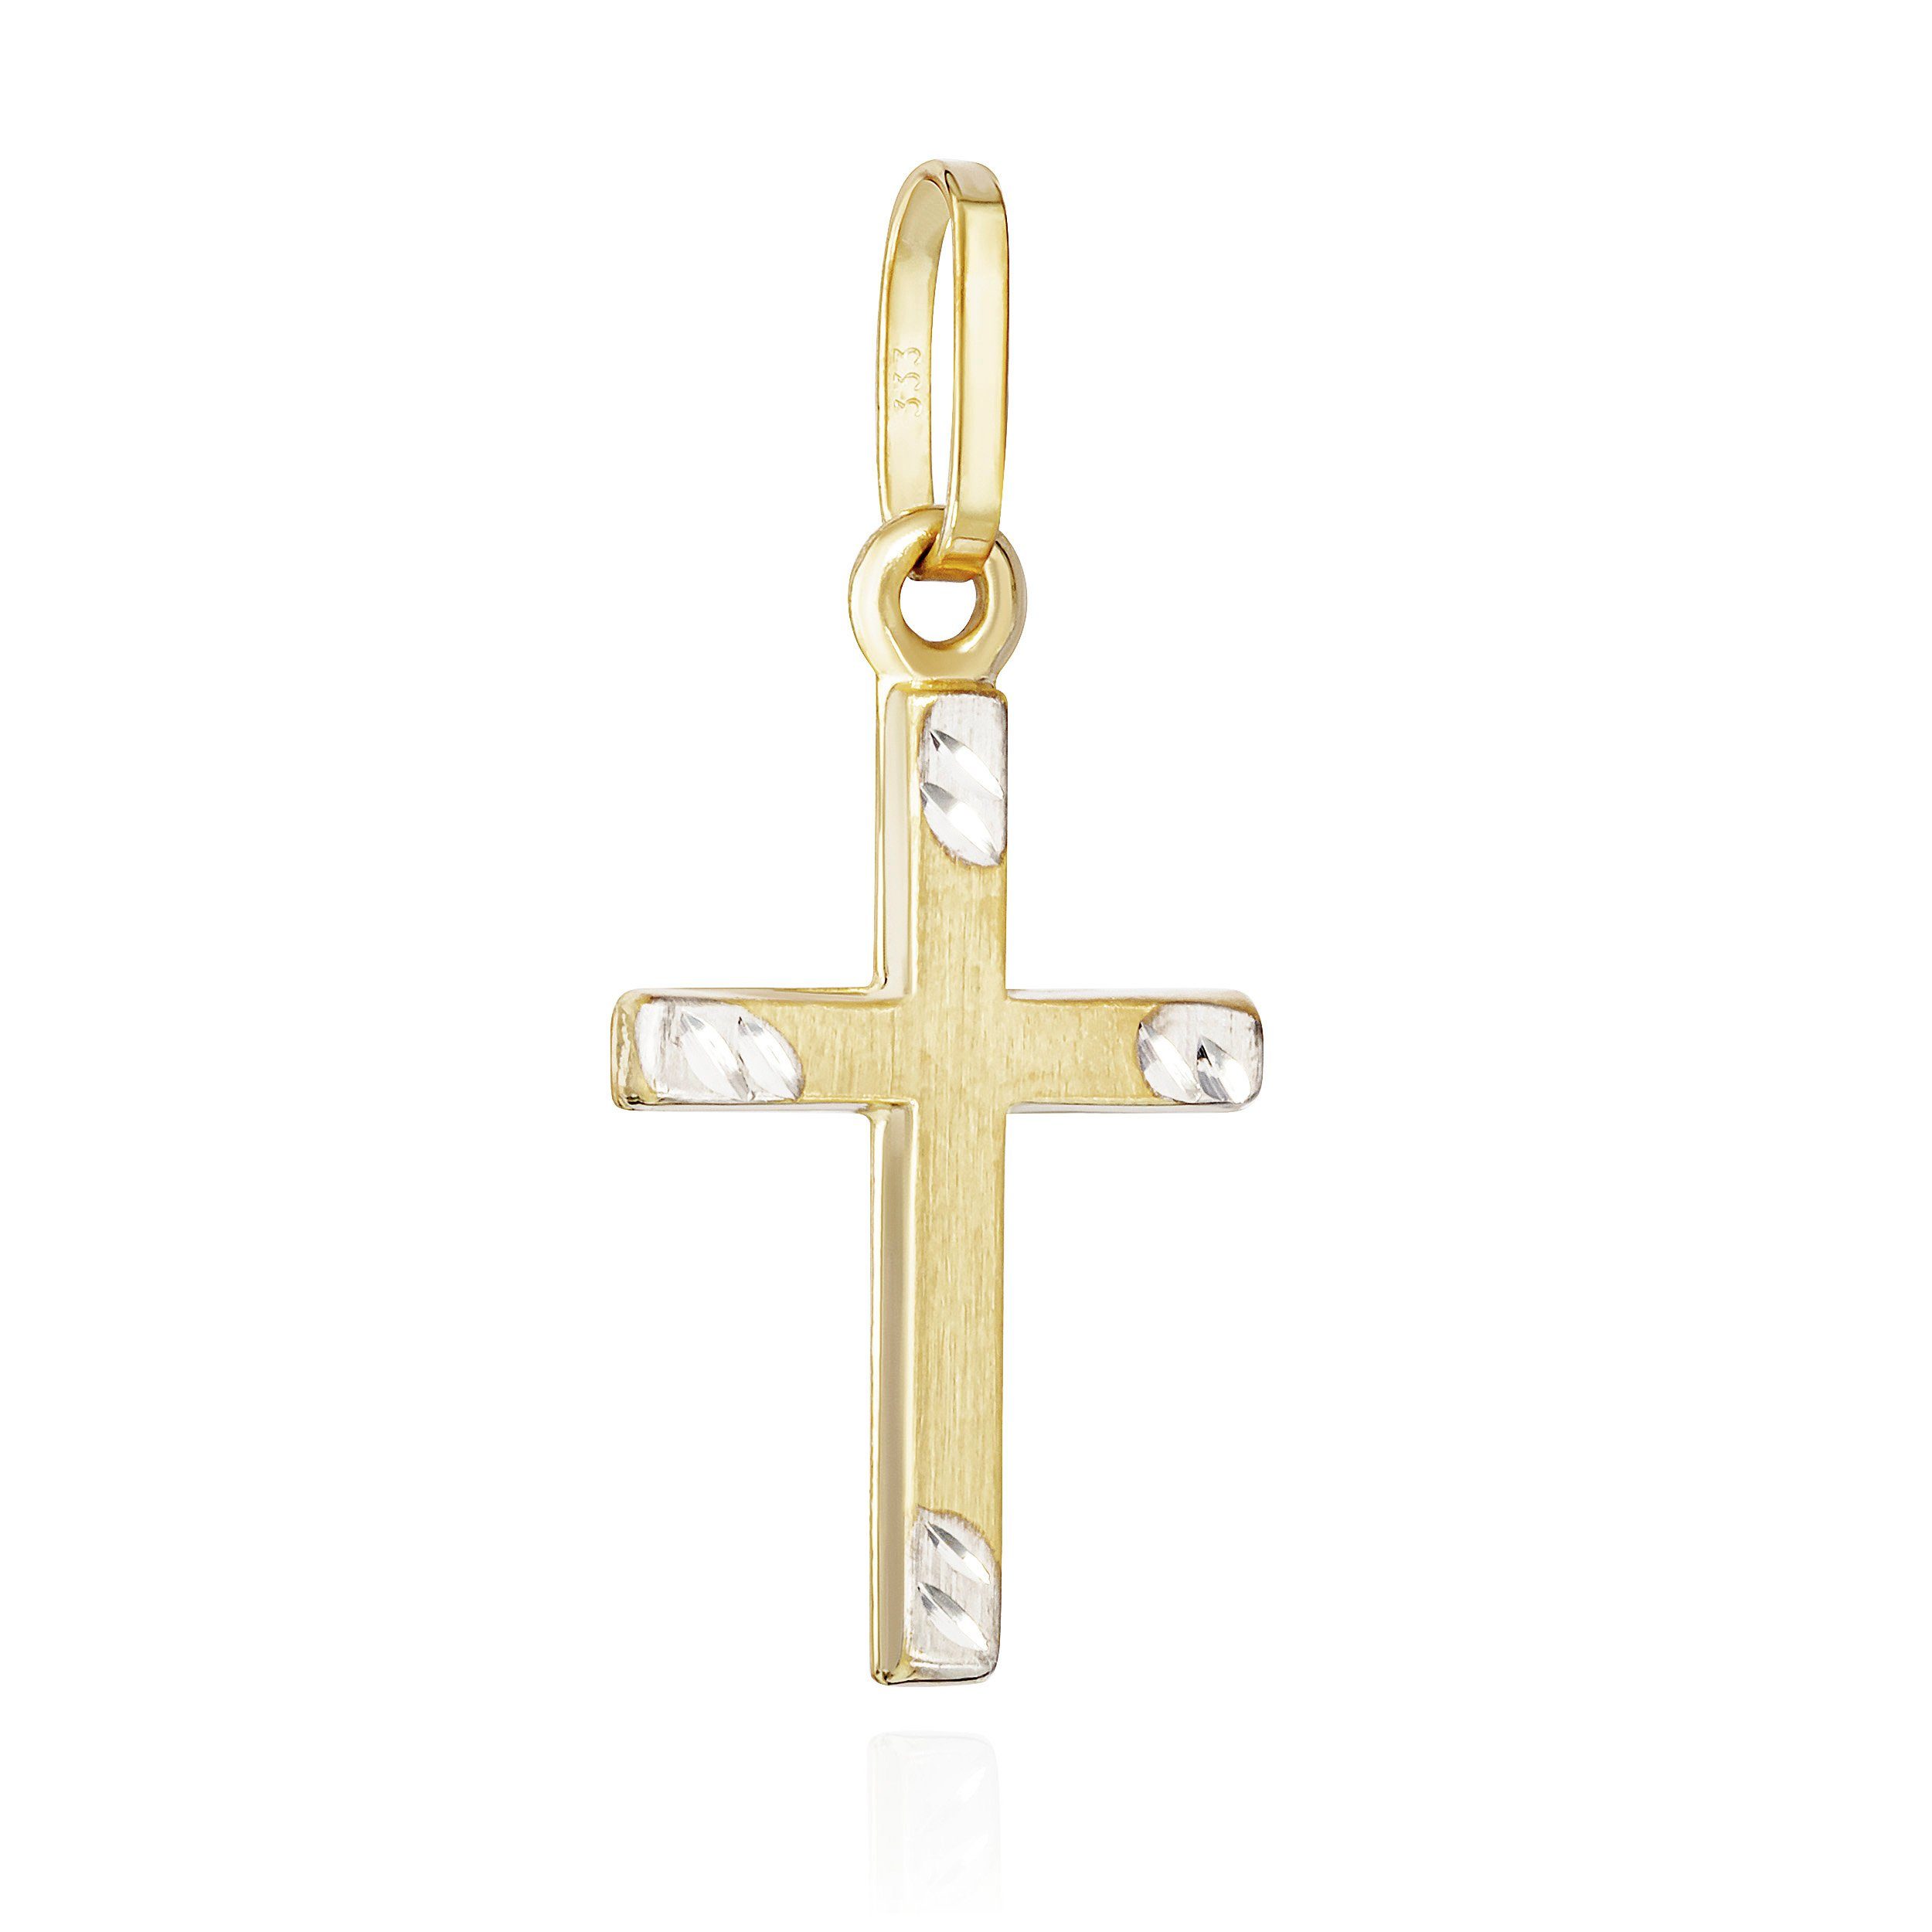 Kettenanhänger Kreuz 17x10mm 333 8 Karat Kru Gelb NKlaus matt Gold diamantiert Kettenanhäger